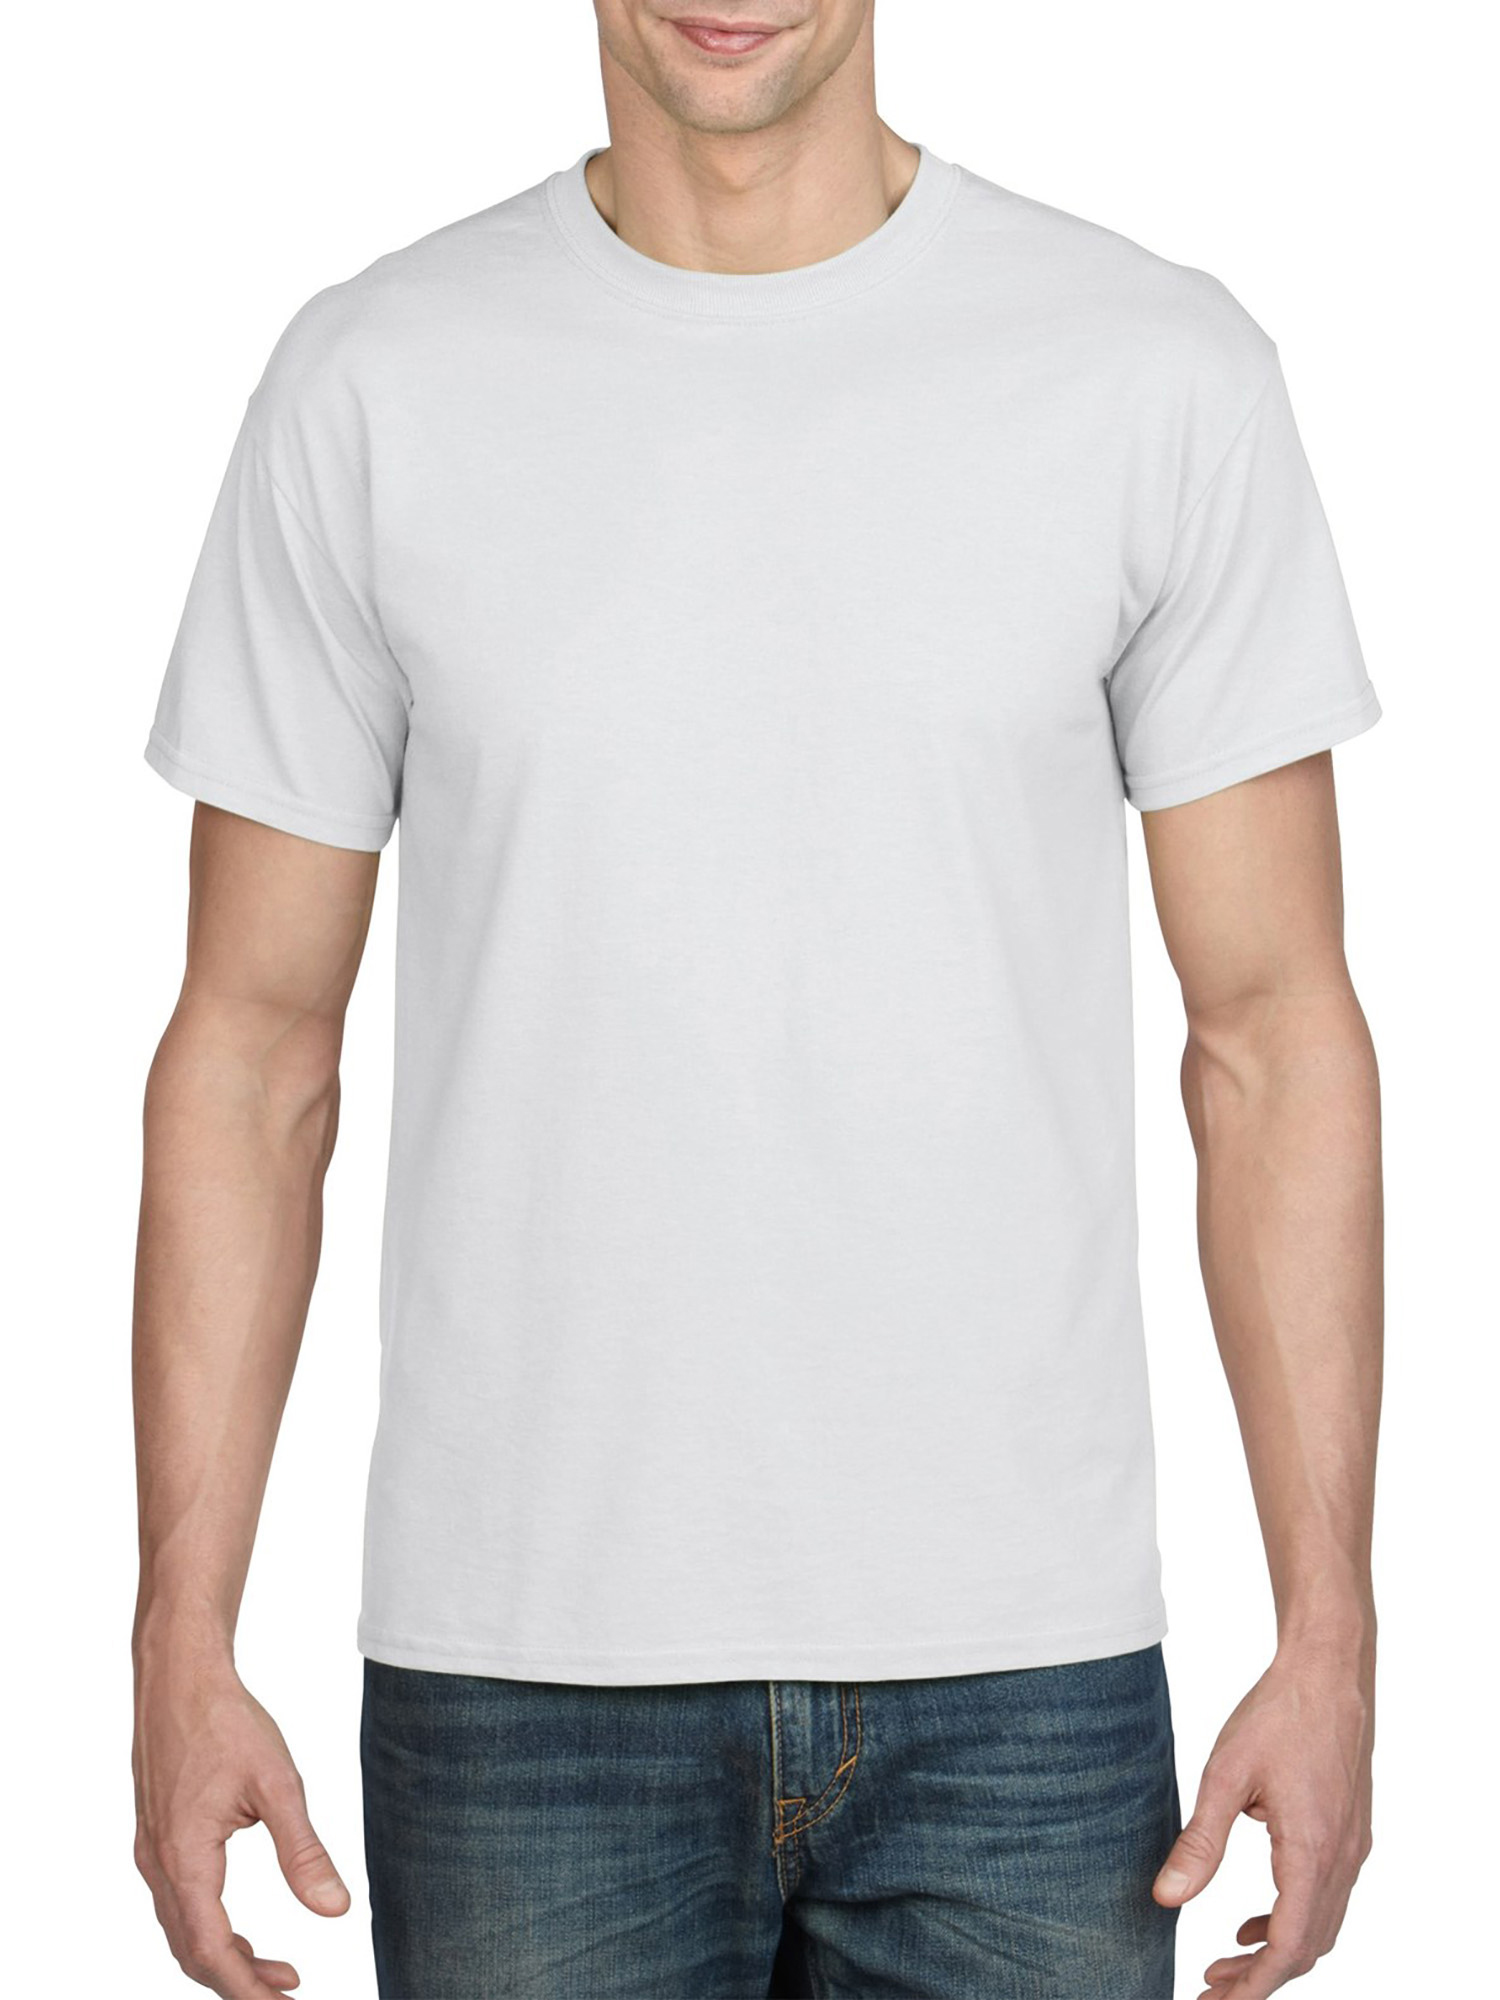 Gildan White Short Sleeve Crew T-Shirt $2.98 (was $4.78)